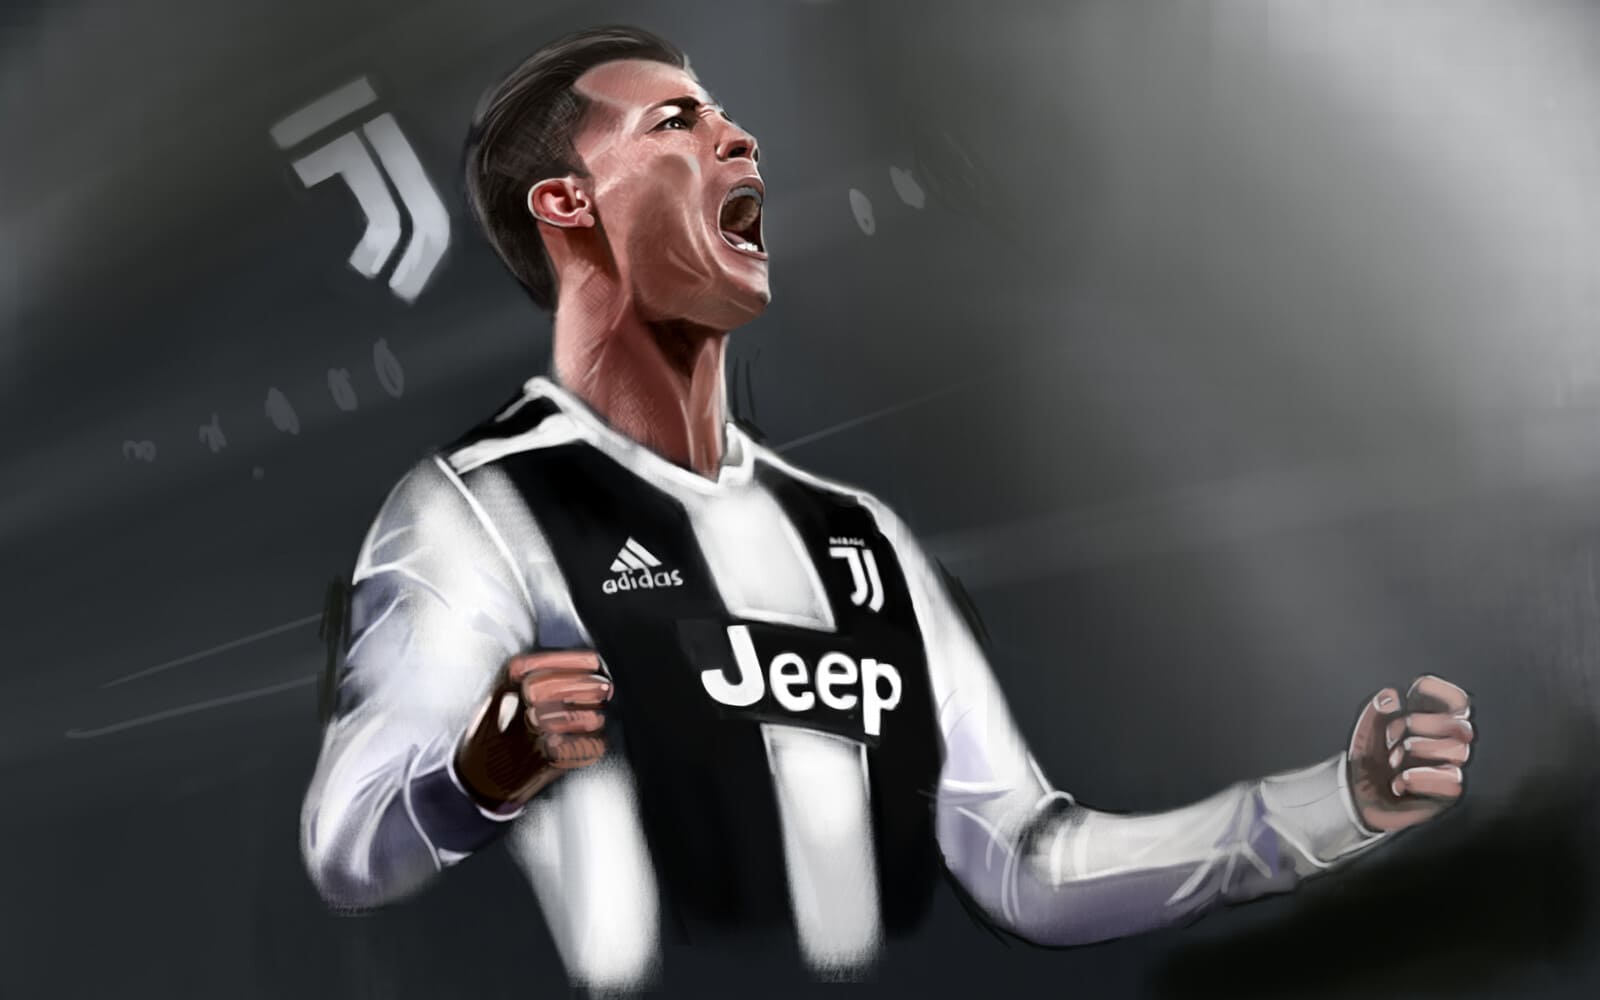 Cristiano Ronaldo 7 2015 Wallpapers